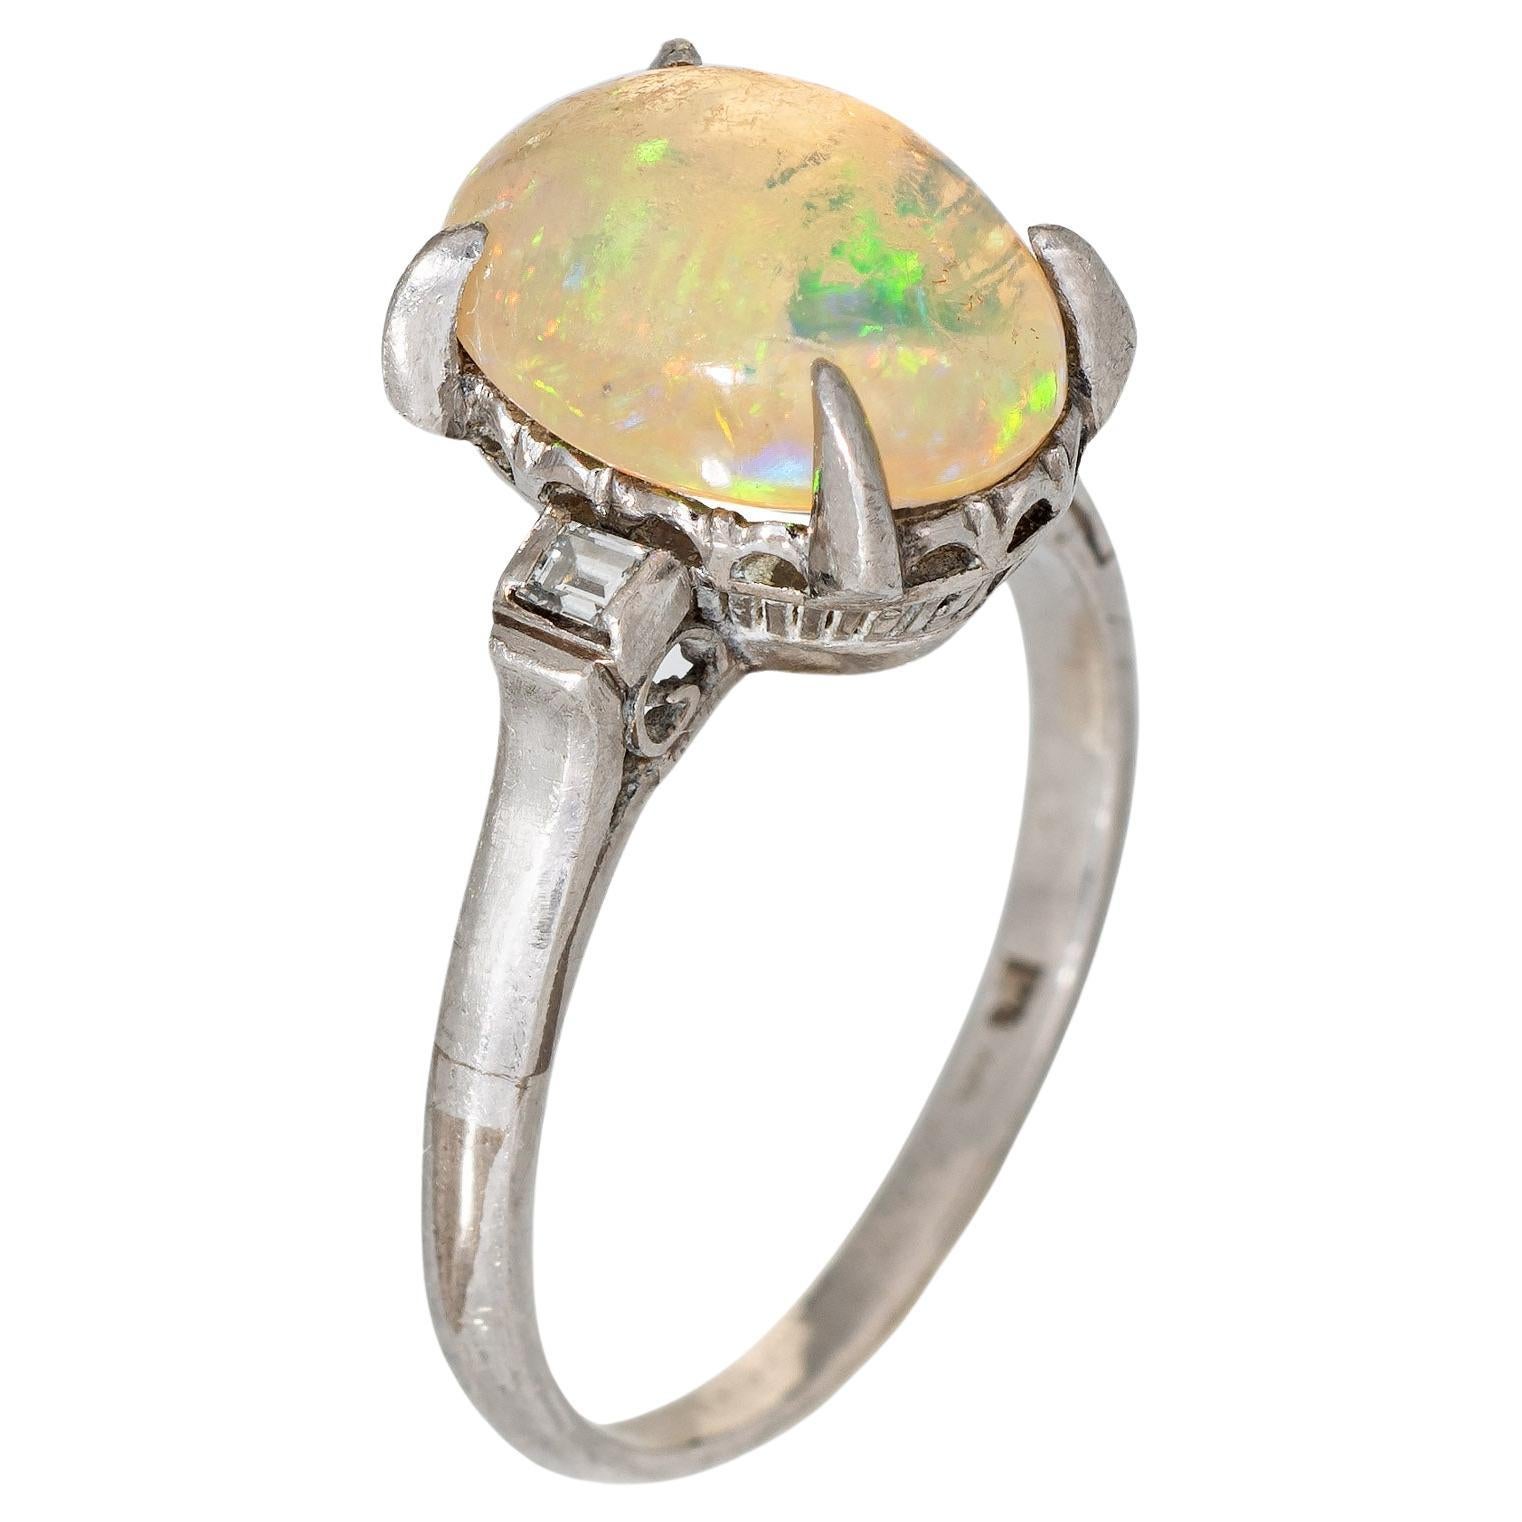 2.75ct Natural Jelly Opal Diamond Ring Platinum Estate Fine Jewelry Sz 6